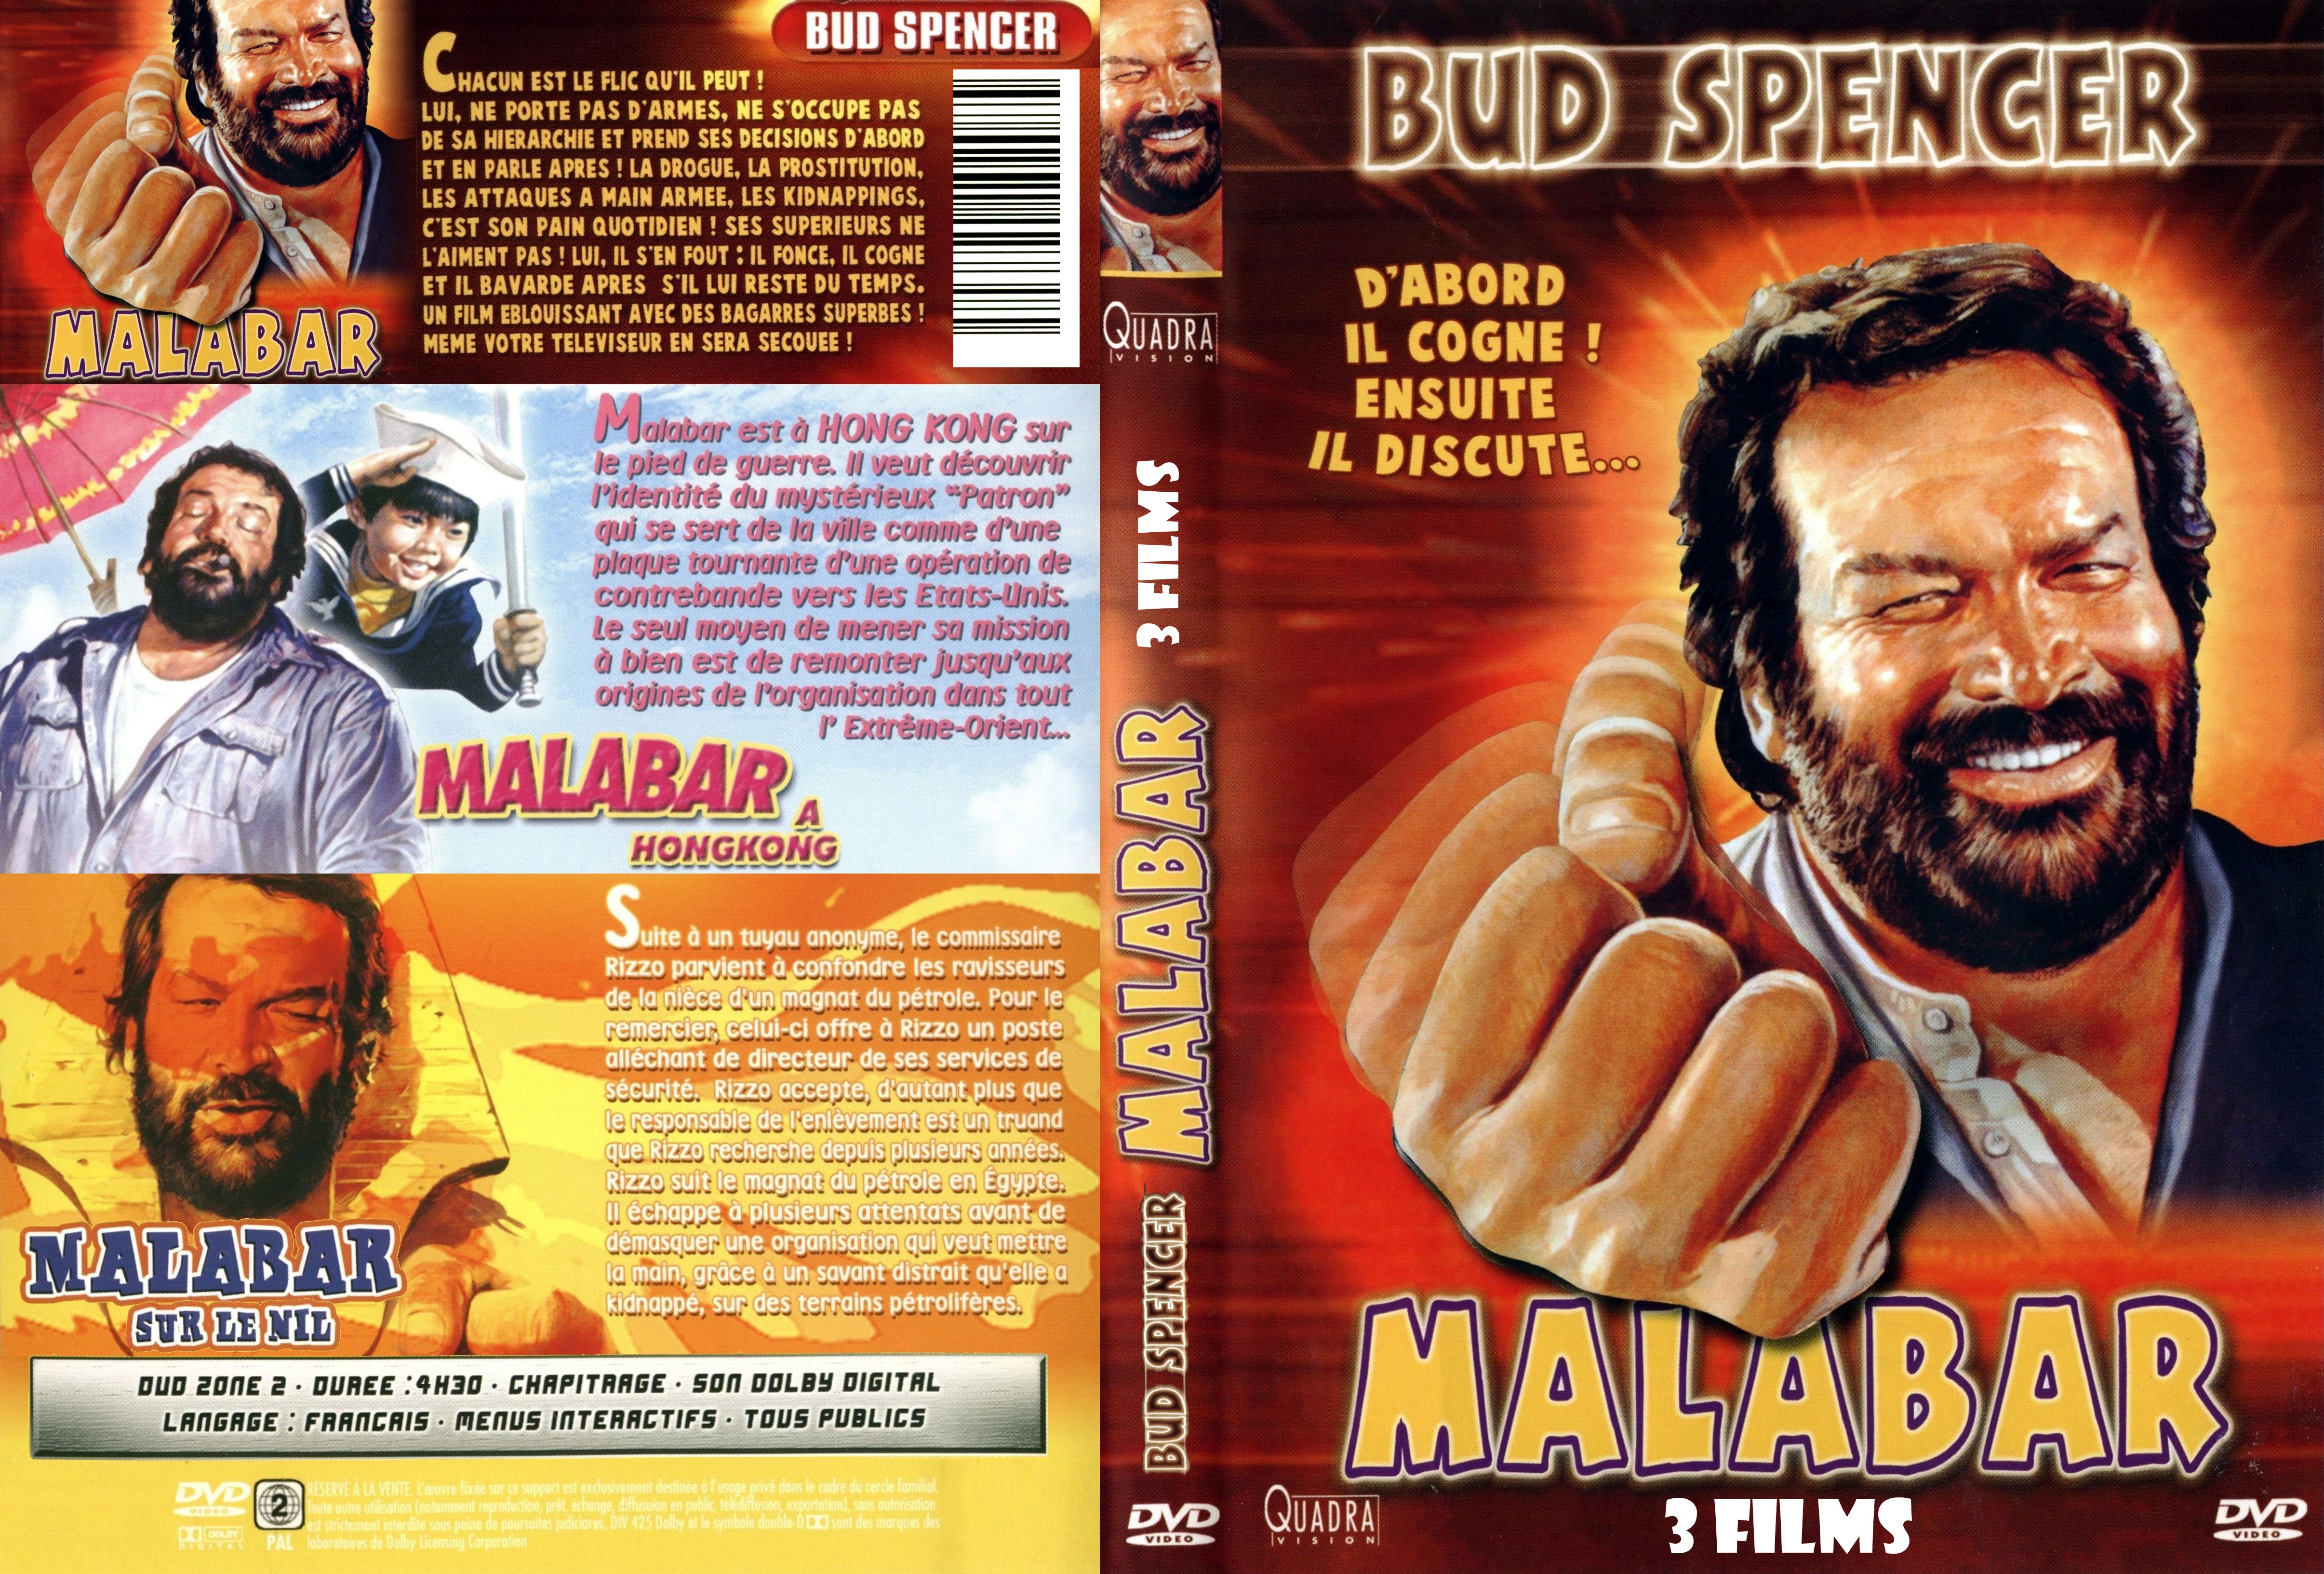 Jaquette DVD Malabar (Bud Spencer) - 3 films